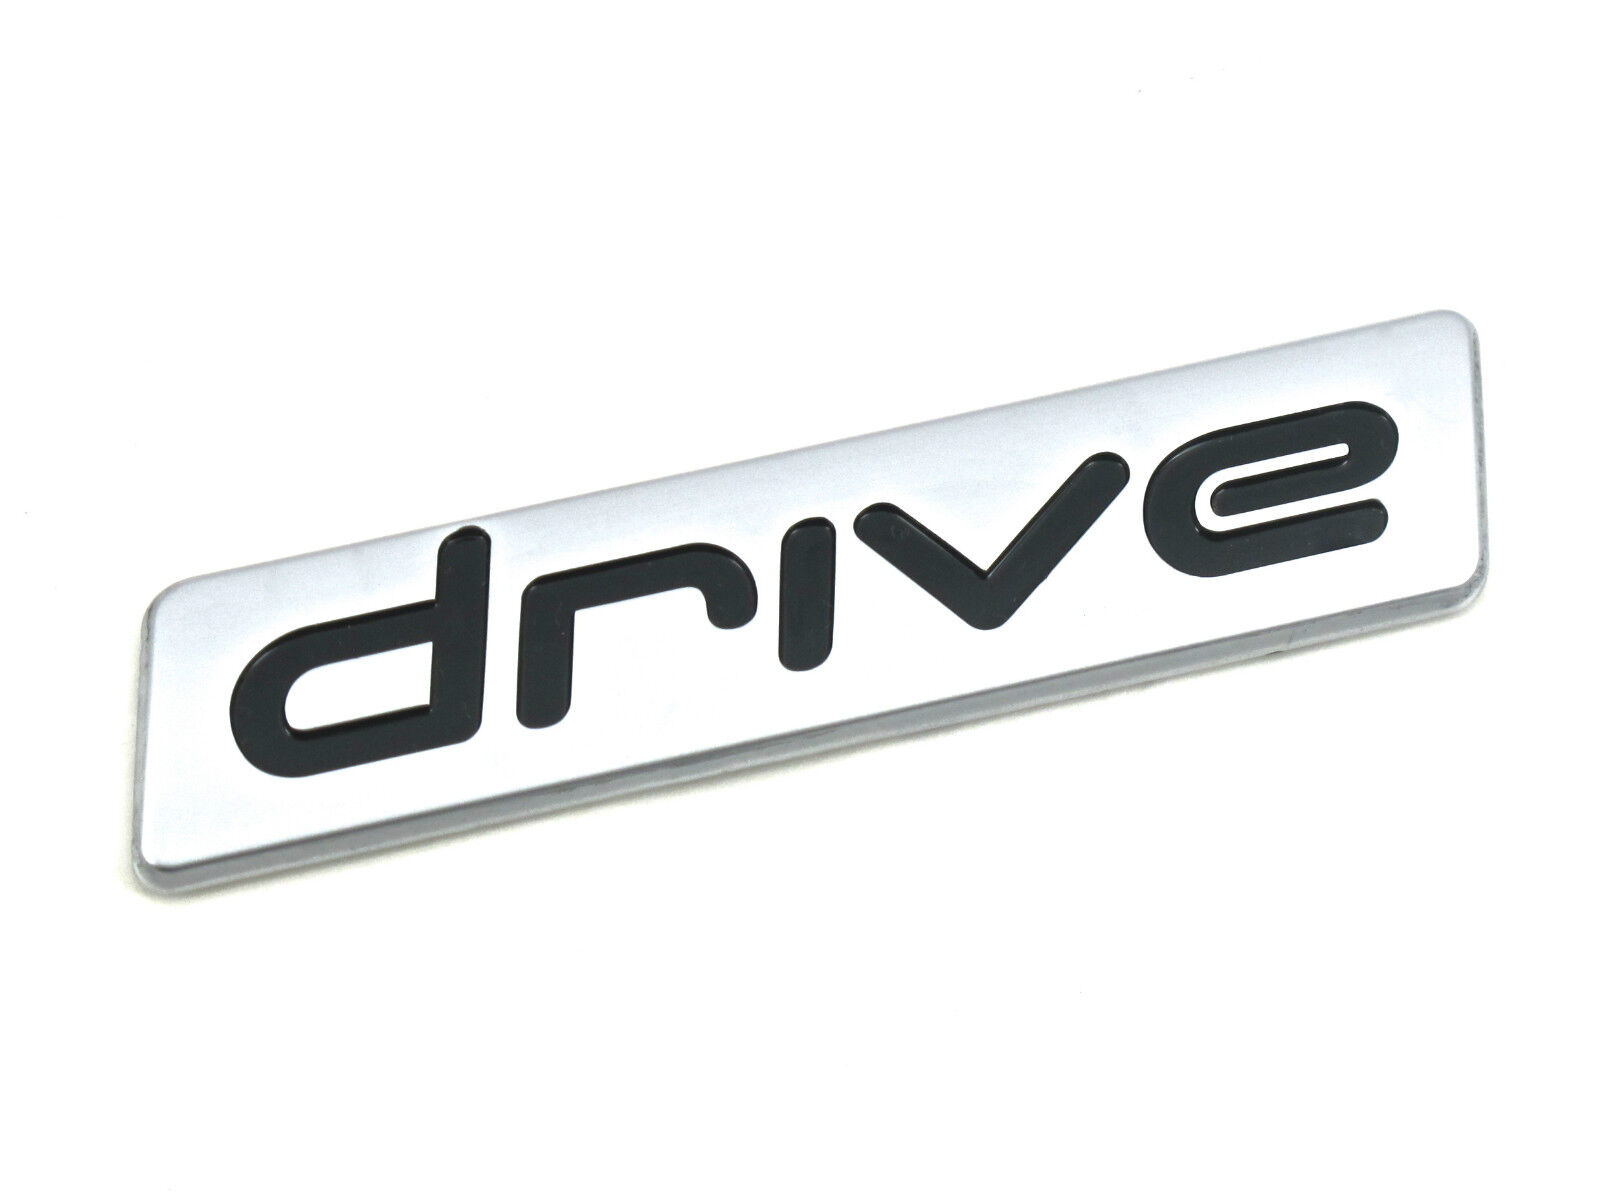 Genuine New HYUNDAI DRIVE BOOT BADGE Emblem i40 2012+ iX20 2010+ Bluedrive Blue